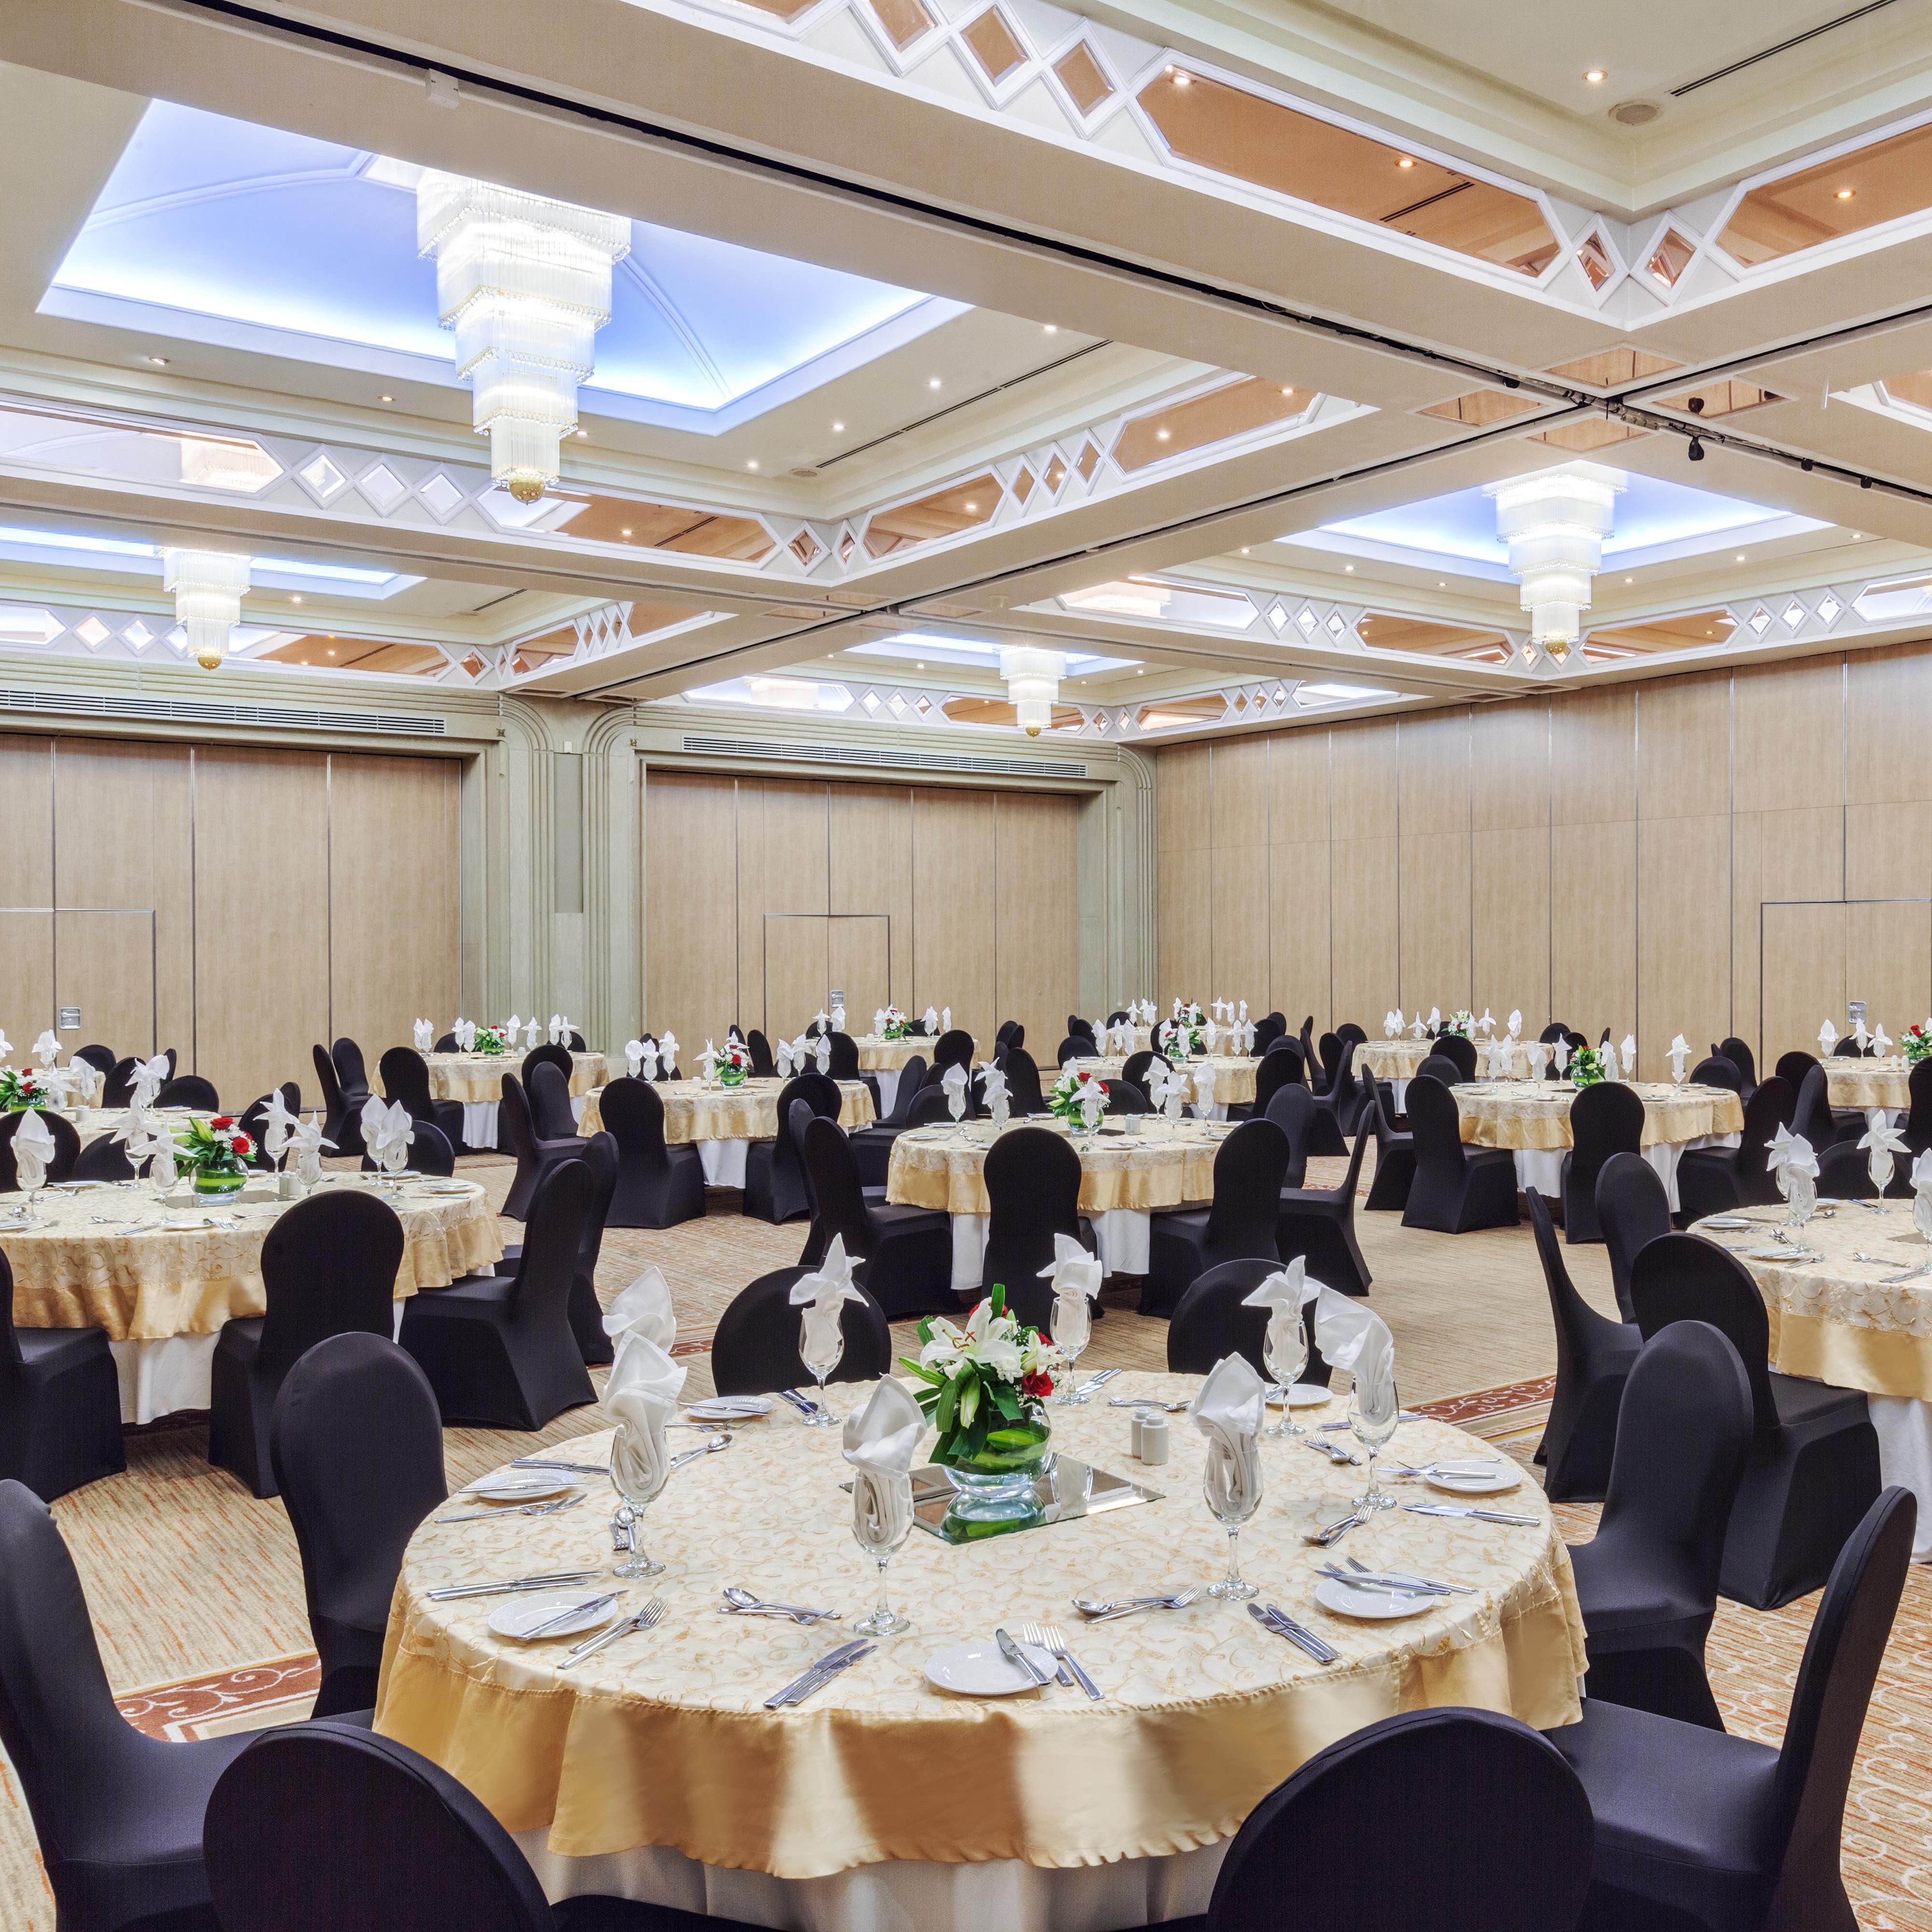 Our majestic 1127 sqm-large Jumairah Ballroom